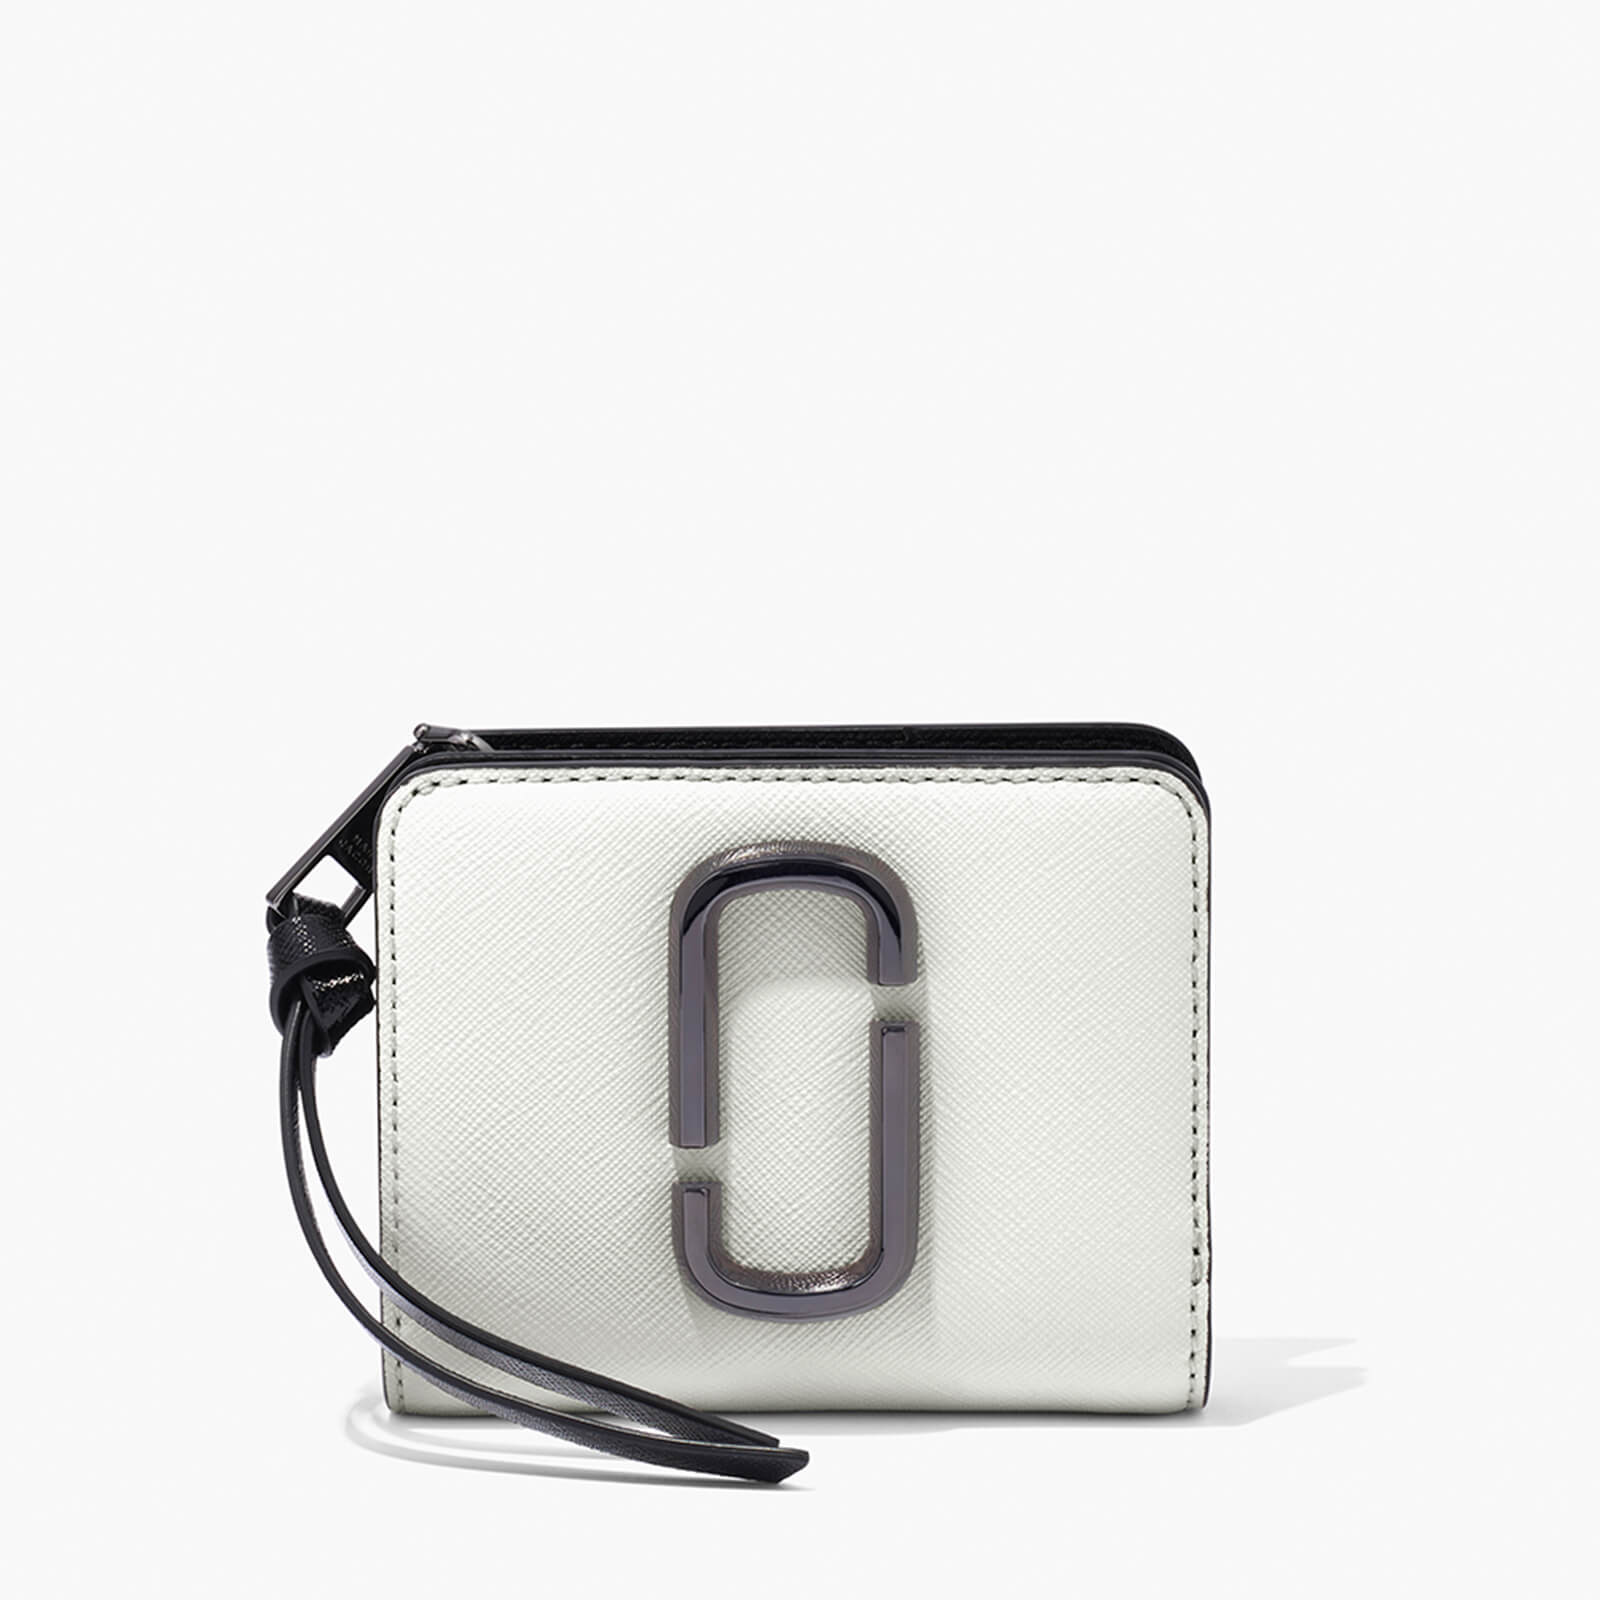 Marc Jacobs Women's Snapshot Mini Compact Wallet - Black/White